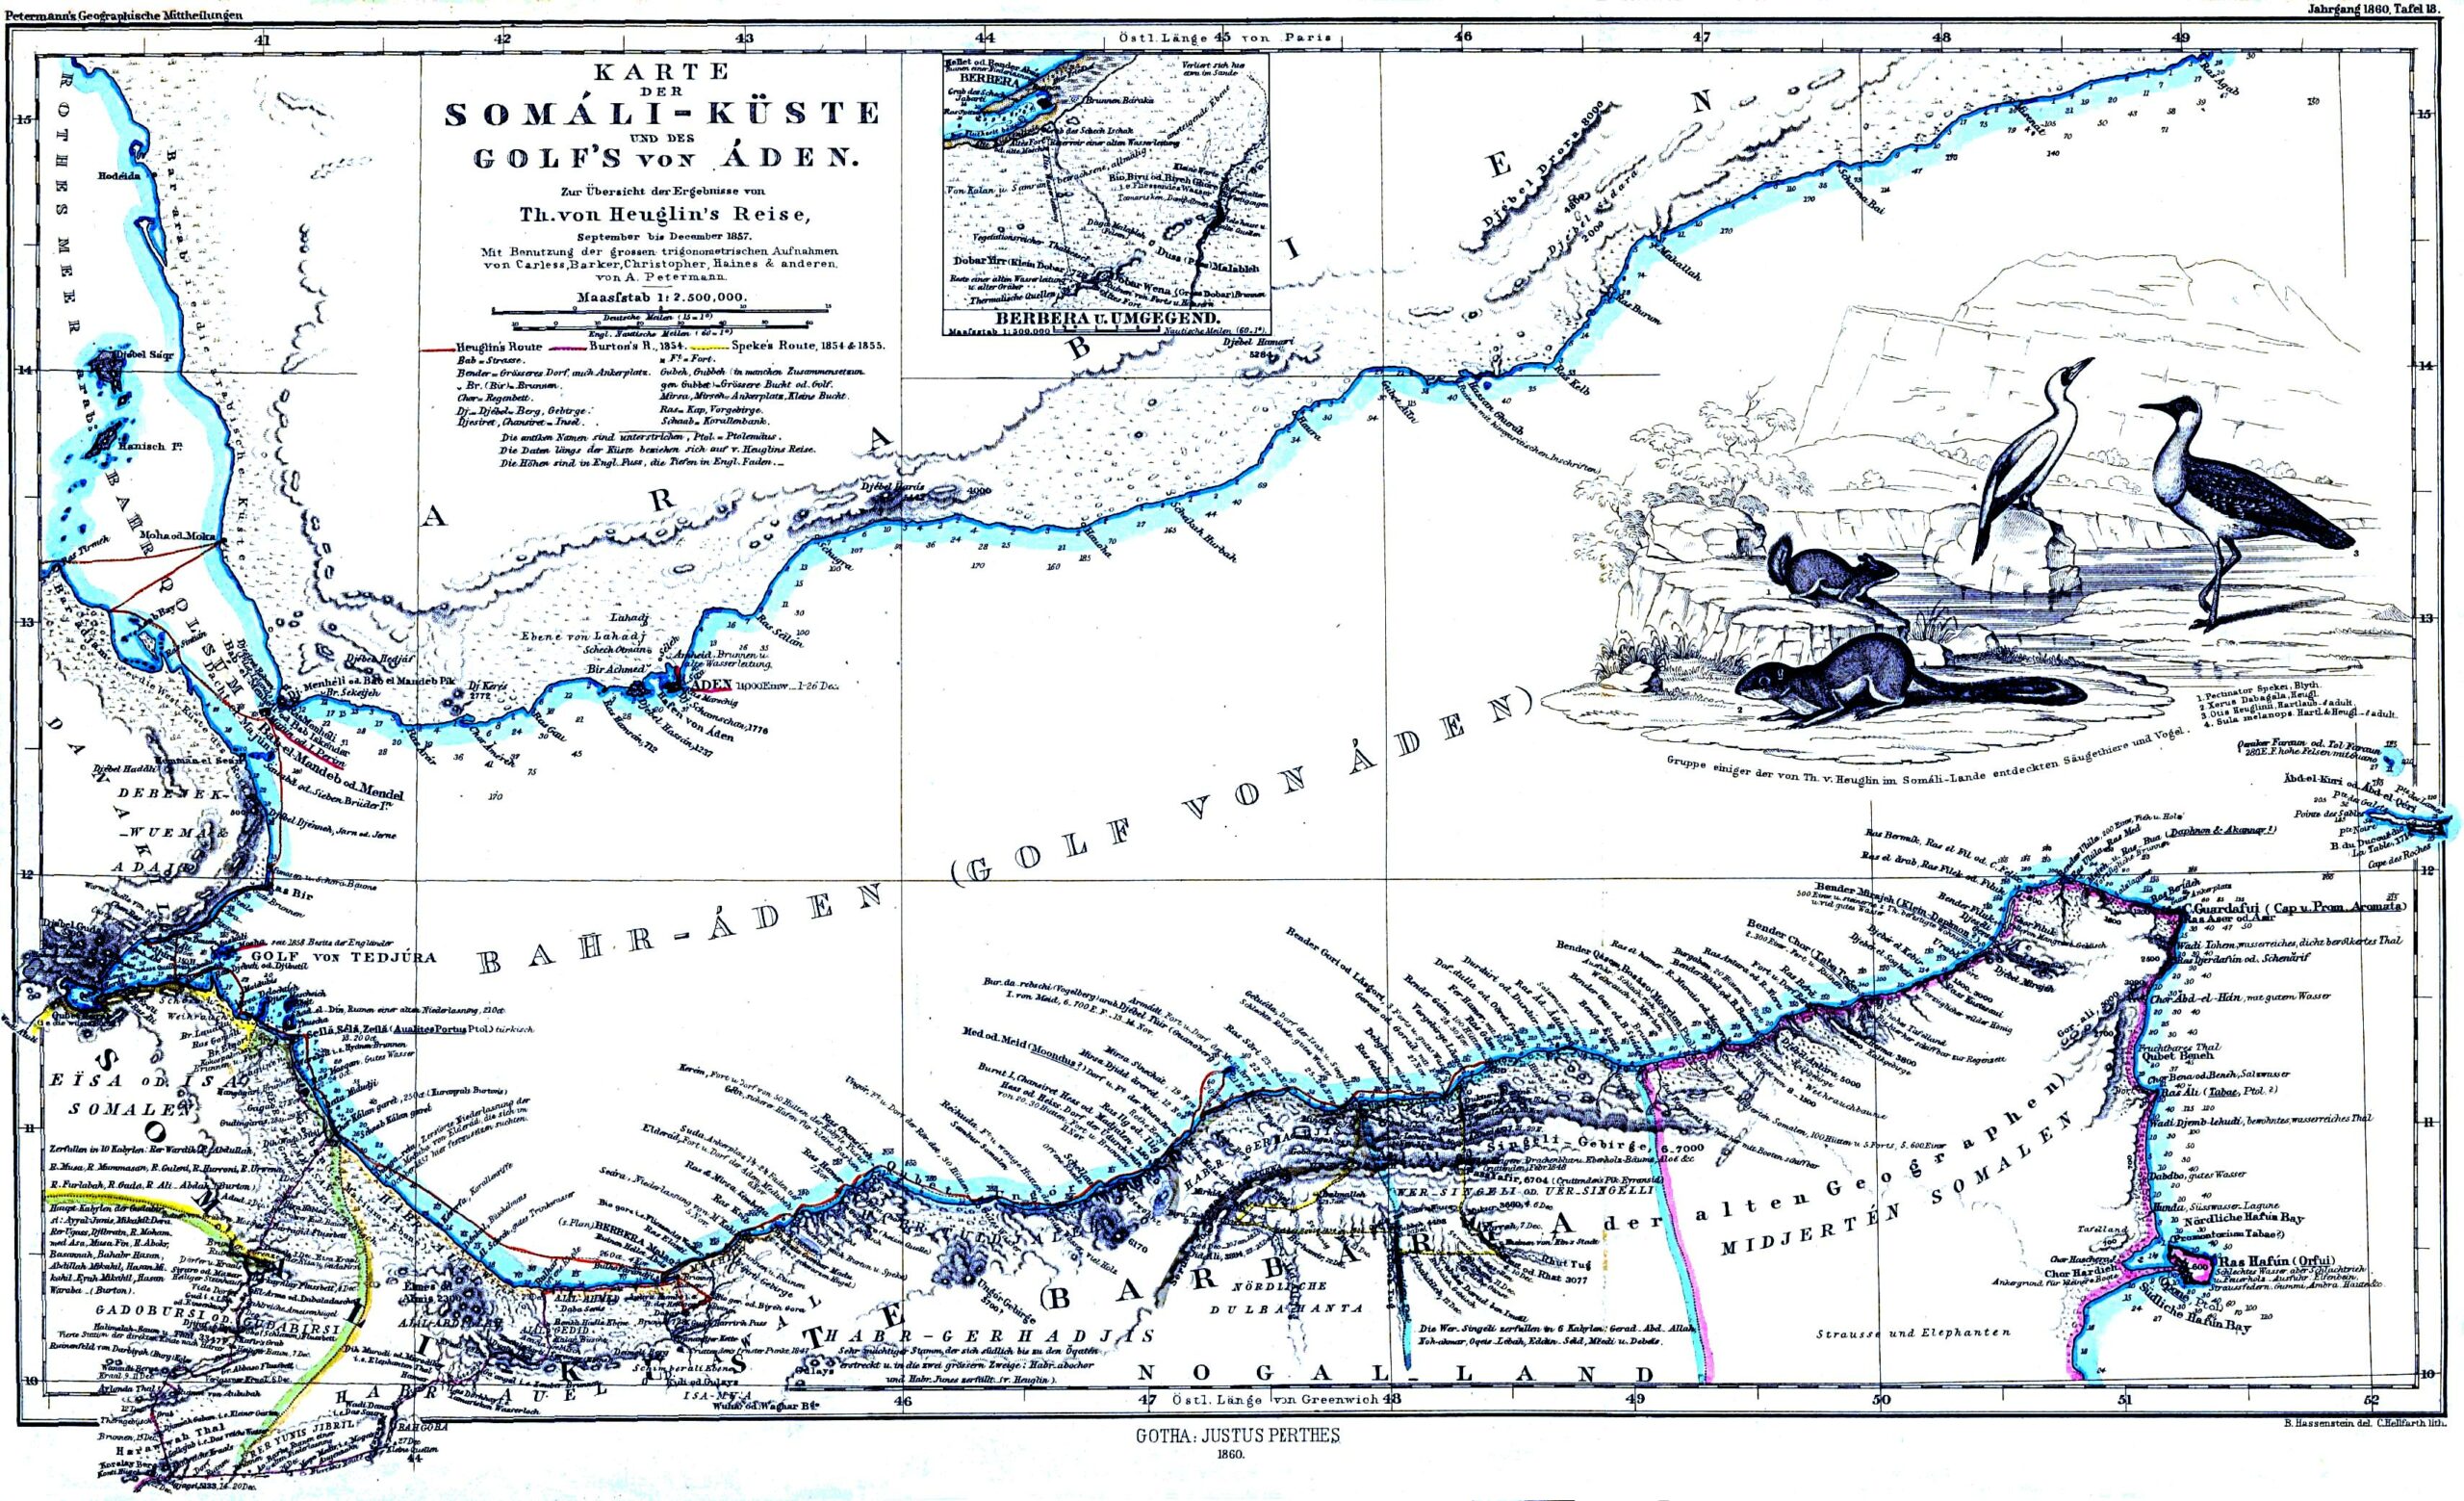 Golfe d'Aden - Carte allemande de 1860 - Domaine public, https://commons.wikimedia.org/w/index.php?curid=621724